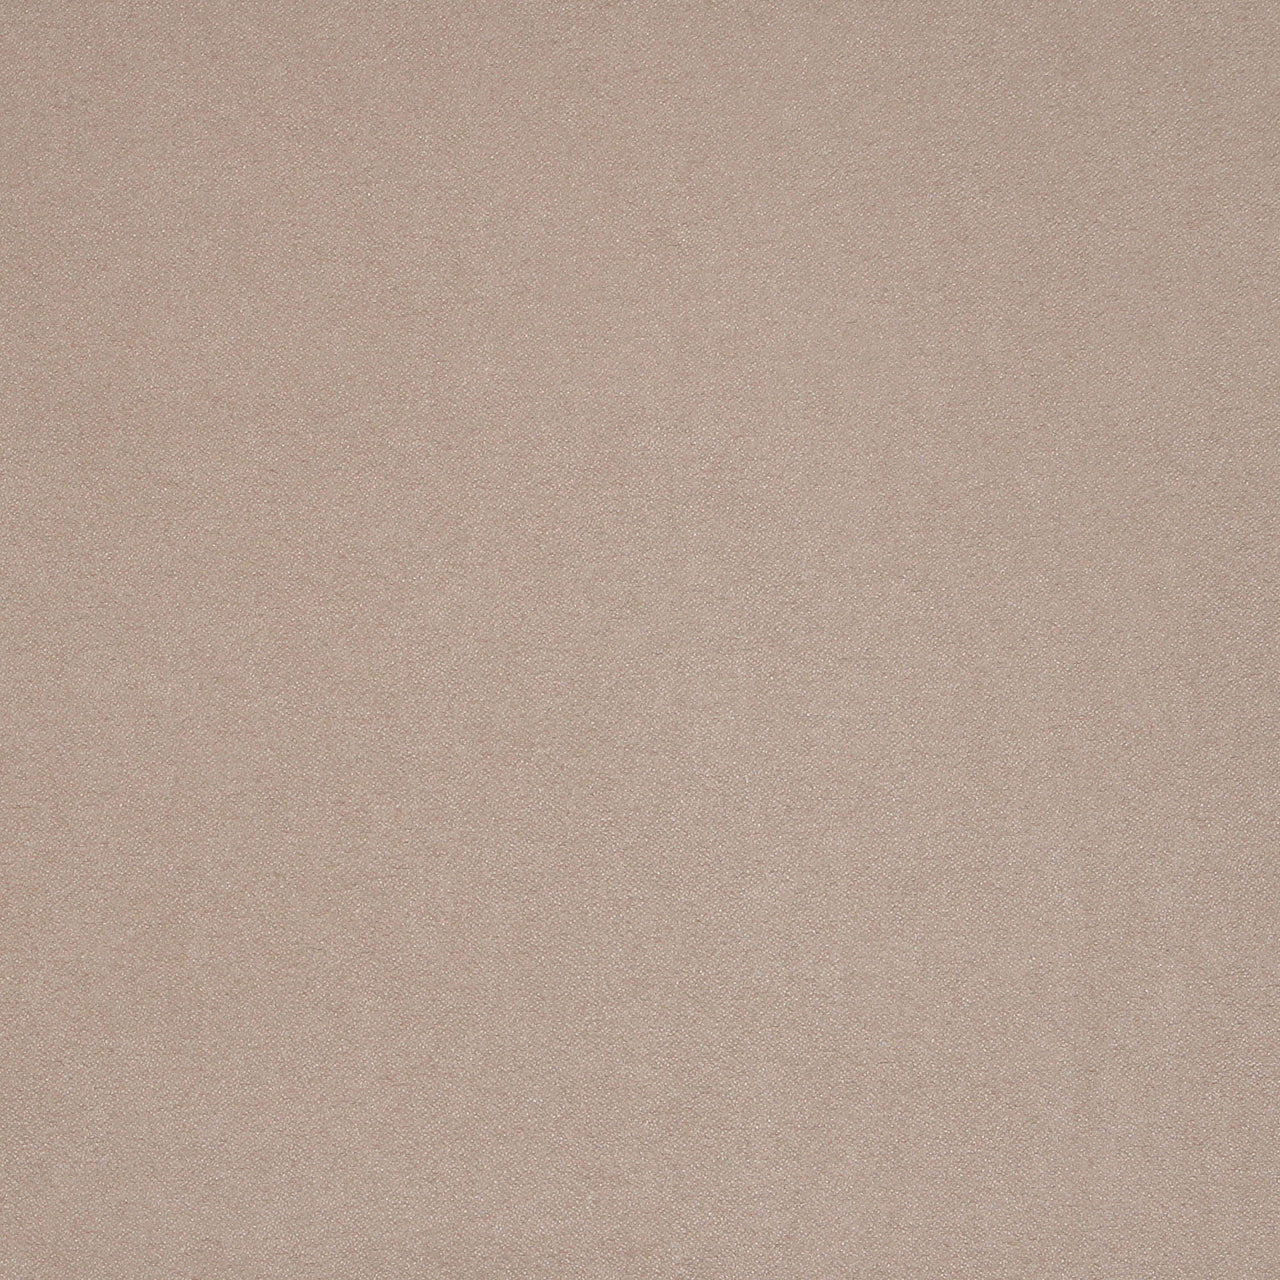 Cremefarbener Wildlederimitatstoff – überlegene Qualität – 100 % Polyester